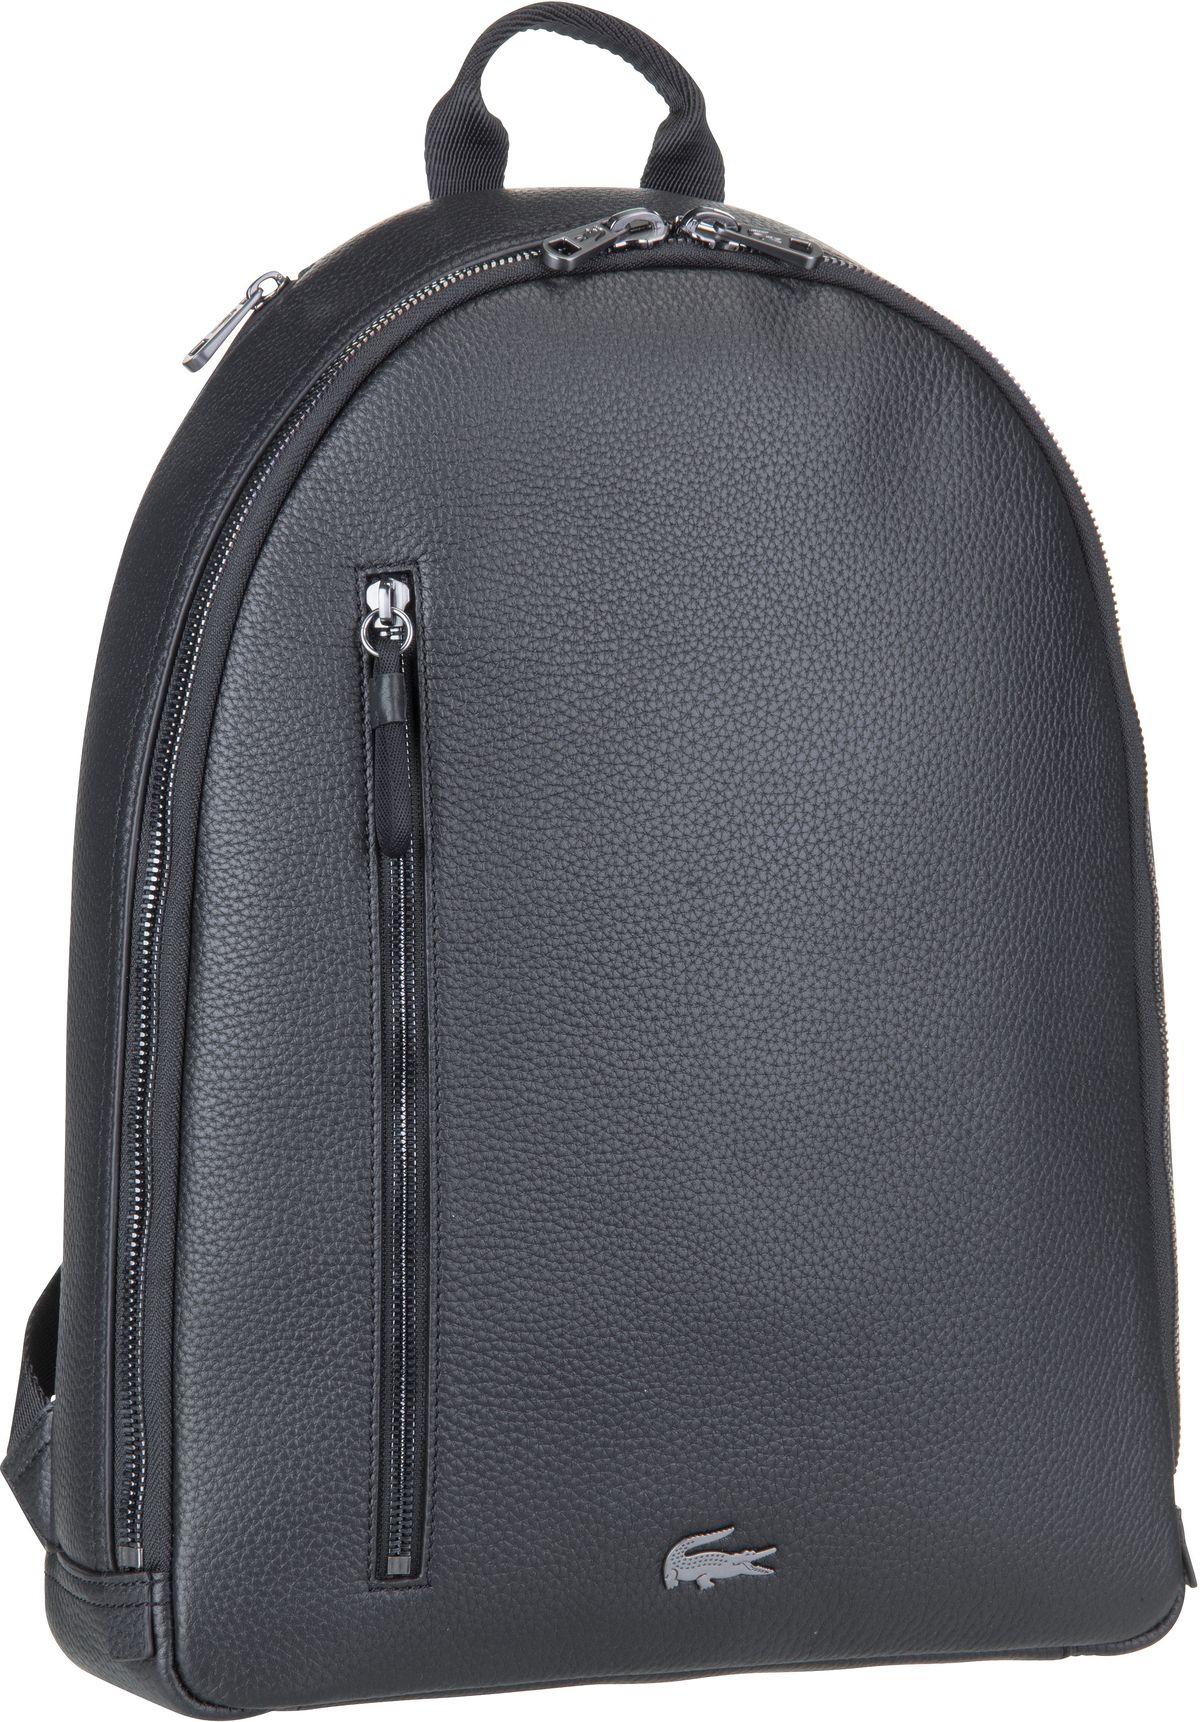 Lacoste Soft Mate Backpack 3330 - Black